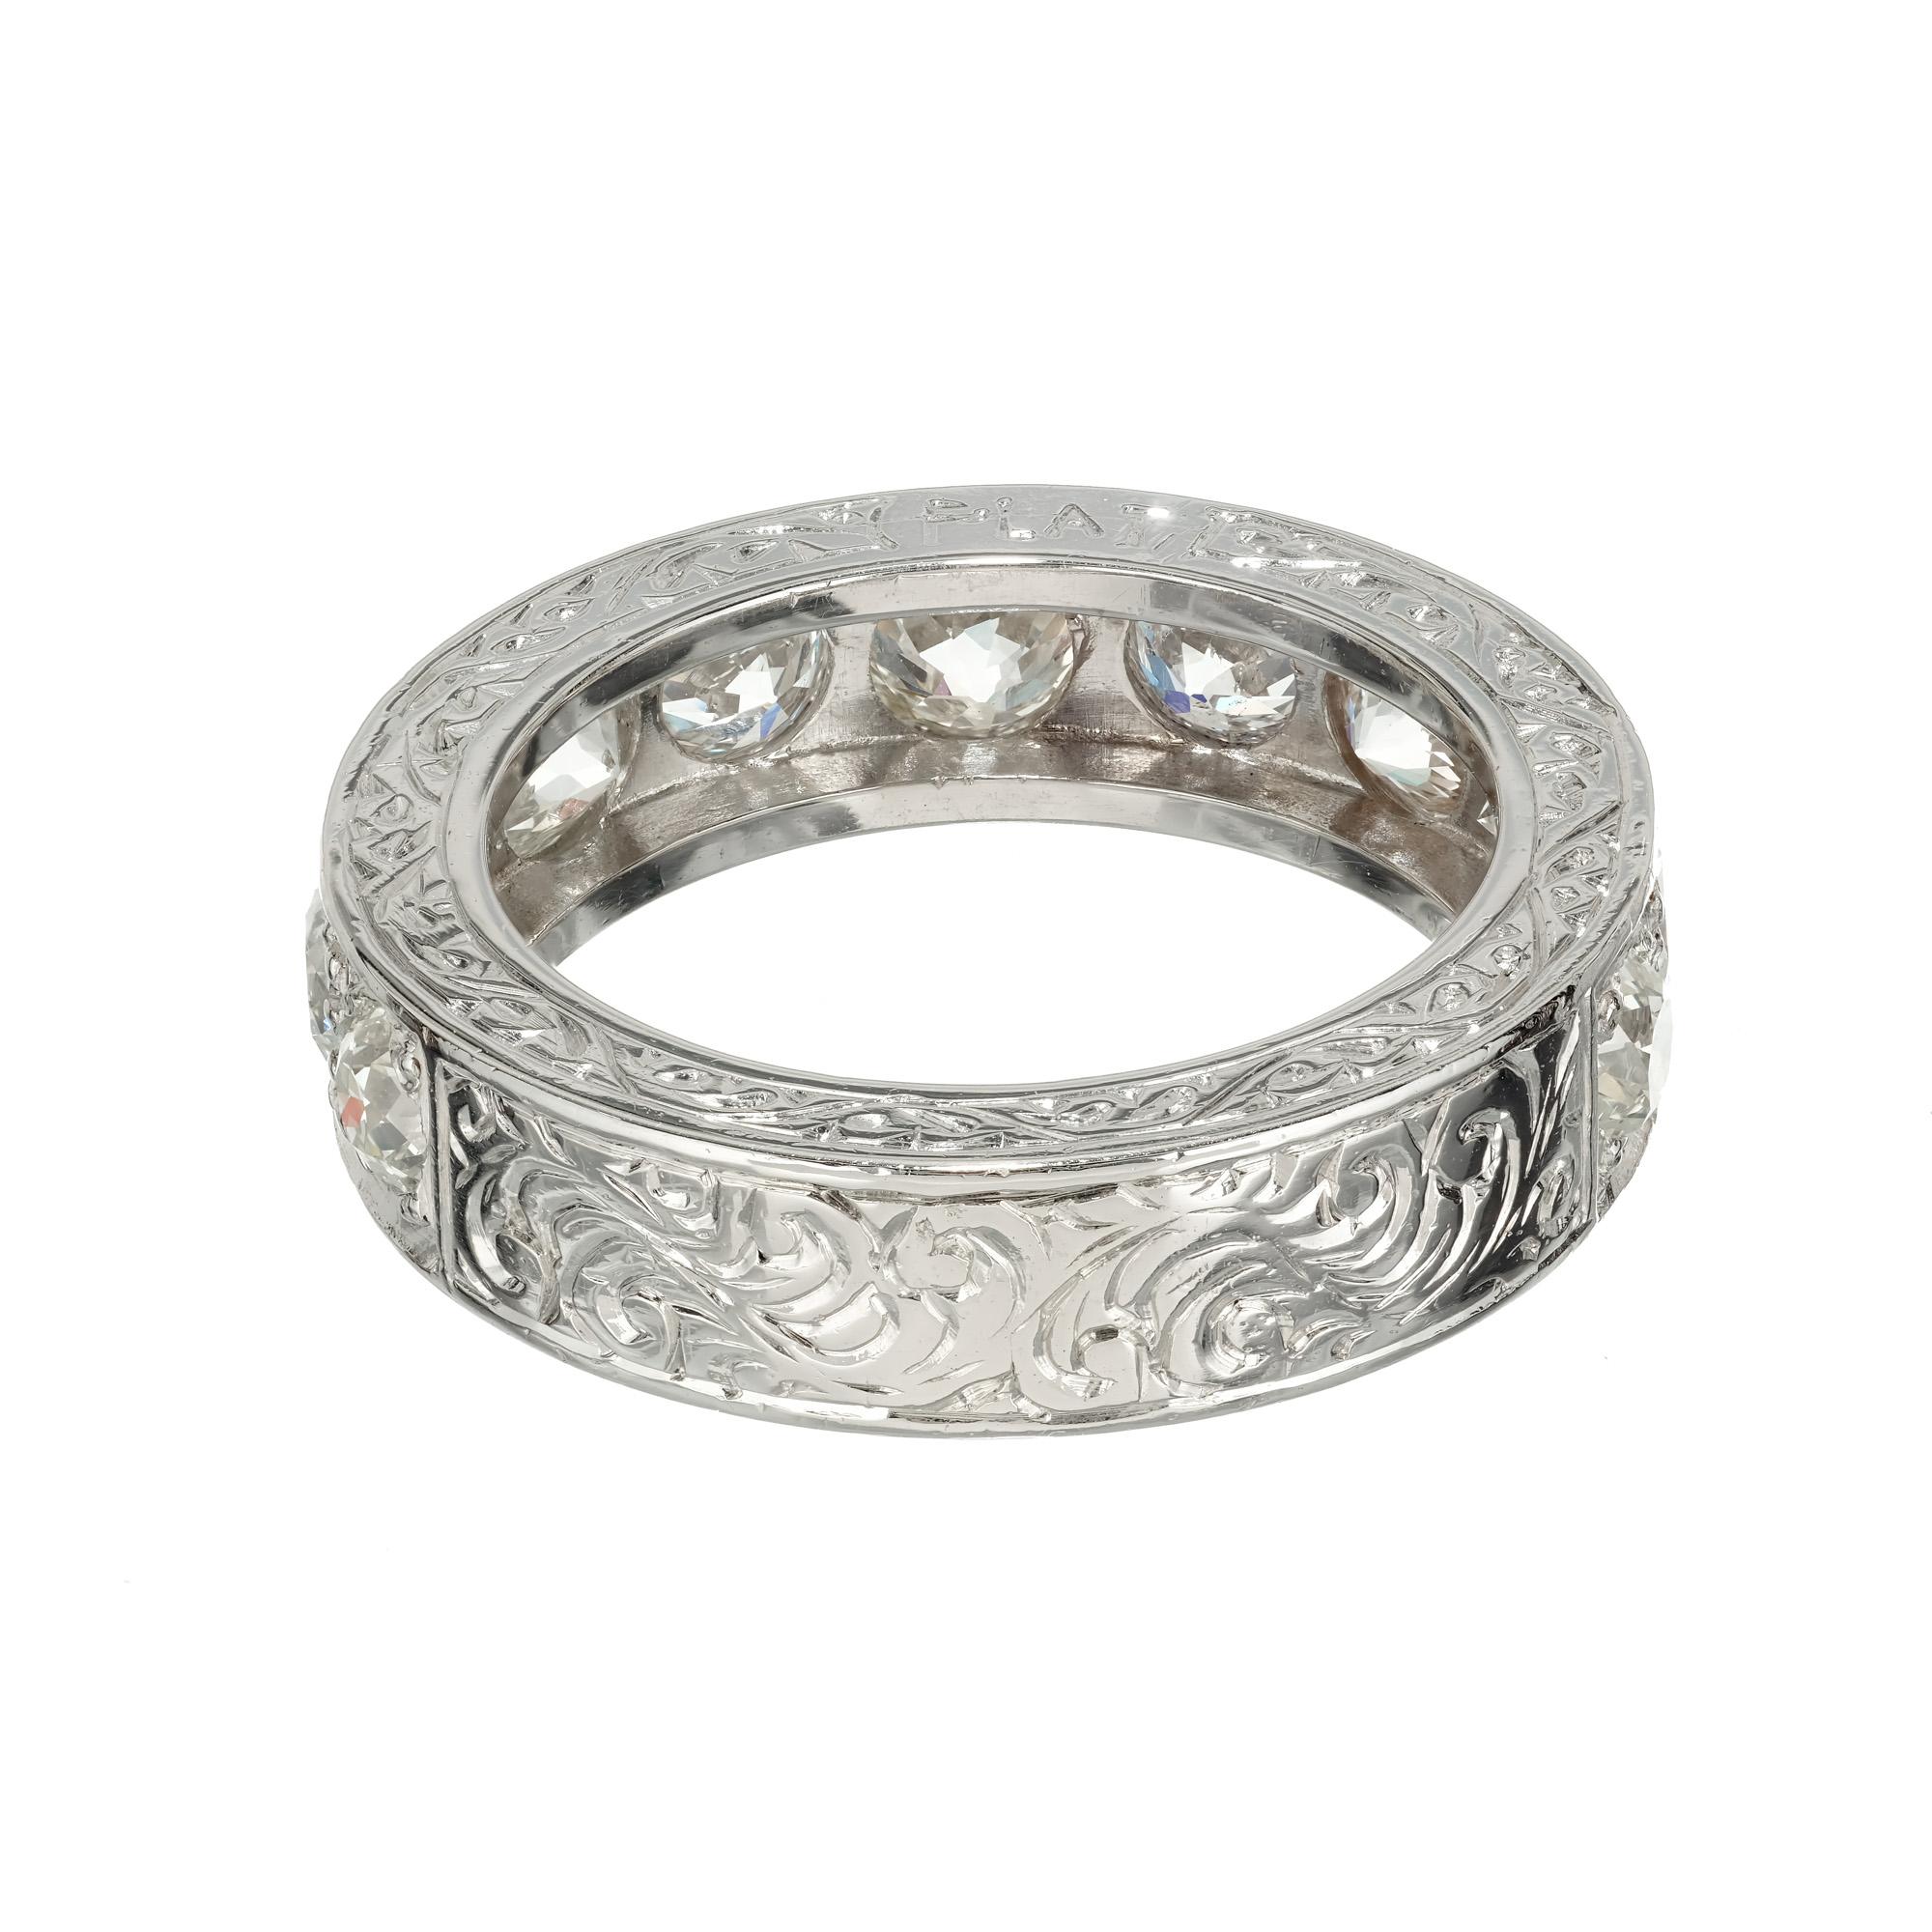 Old European Cut Peter Suchy 3.80 Carat Diamond Platinum Wedding Band Ring